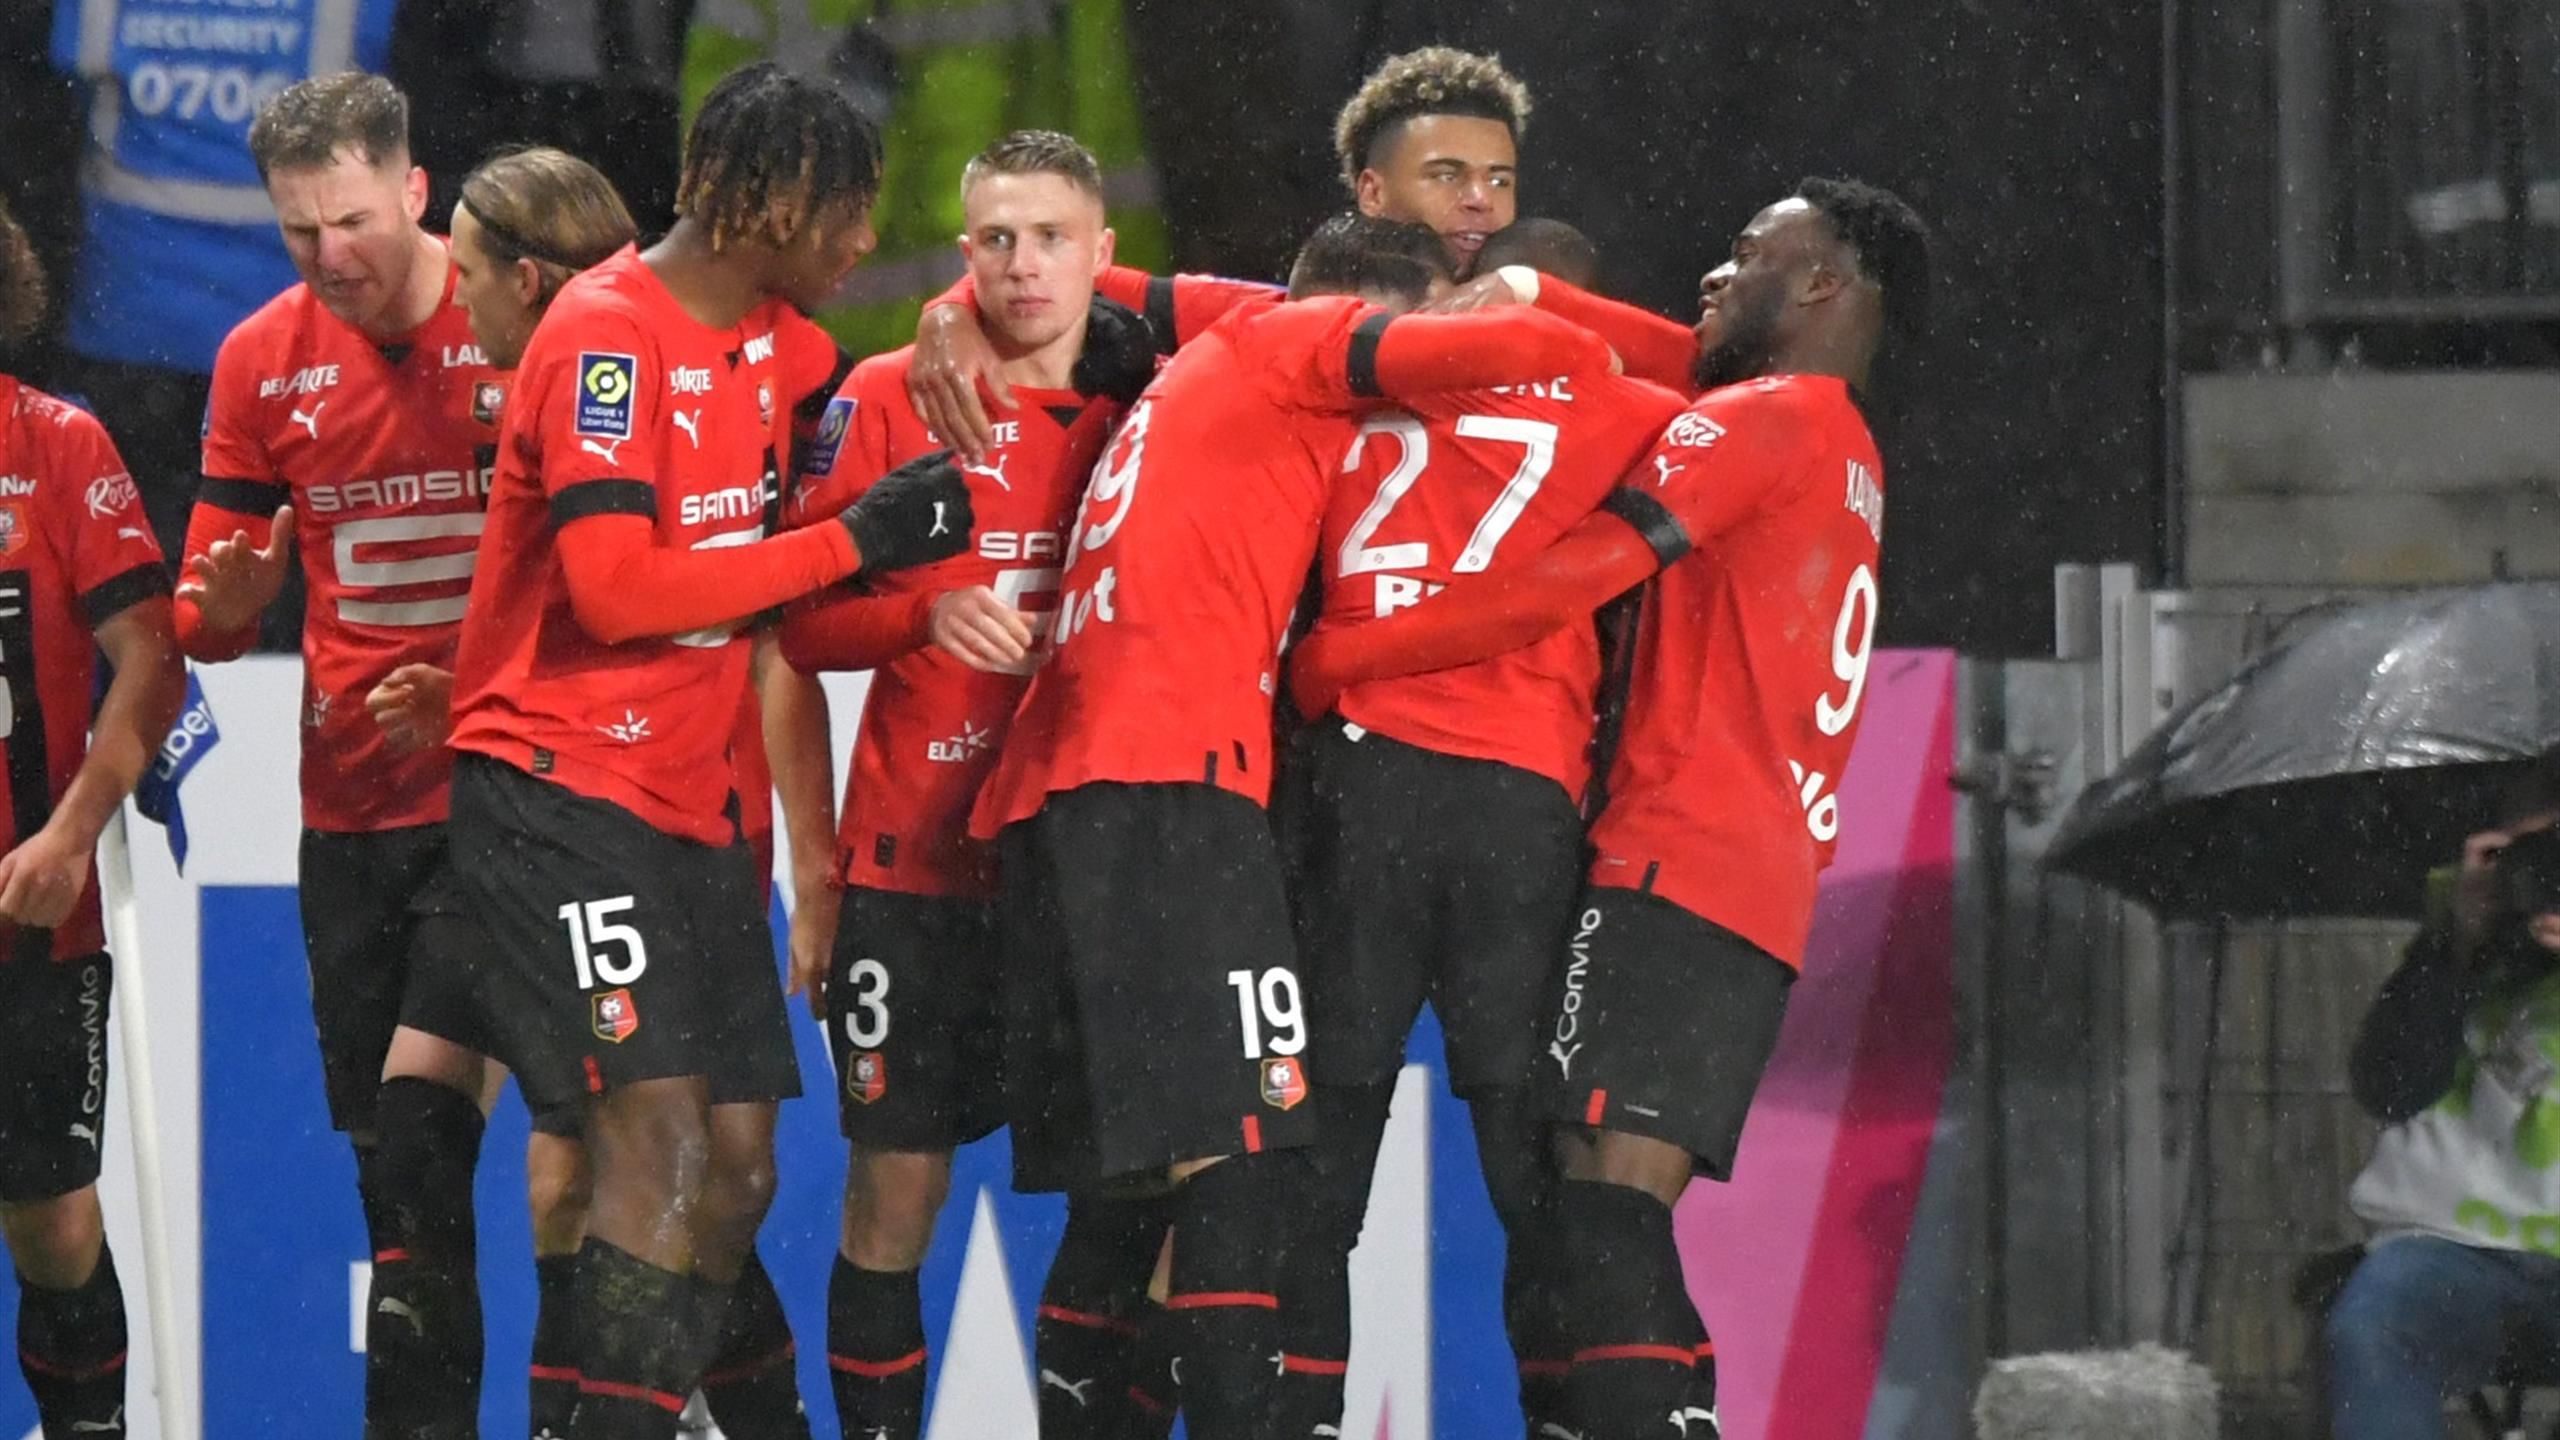 Versnellen Kameel zuurgraad Traoare winner gives Paris Saint-Germain title setback after shock Rennes  defeat in Ligue 1 - Eurosport